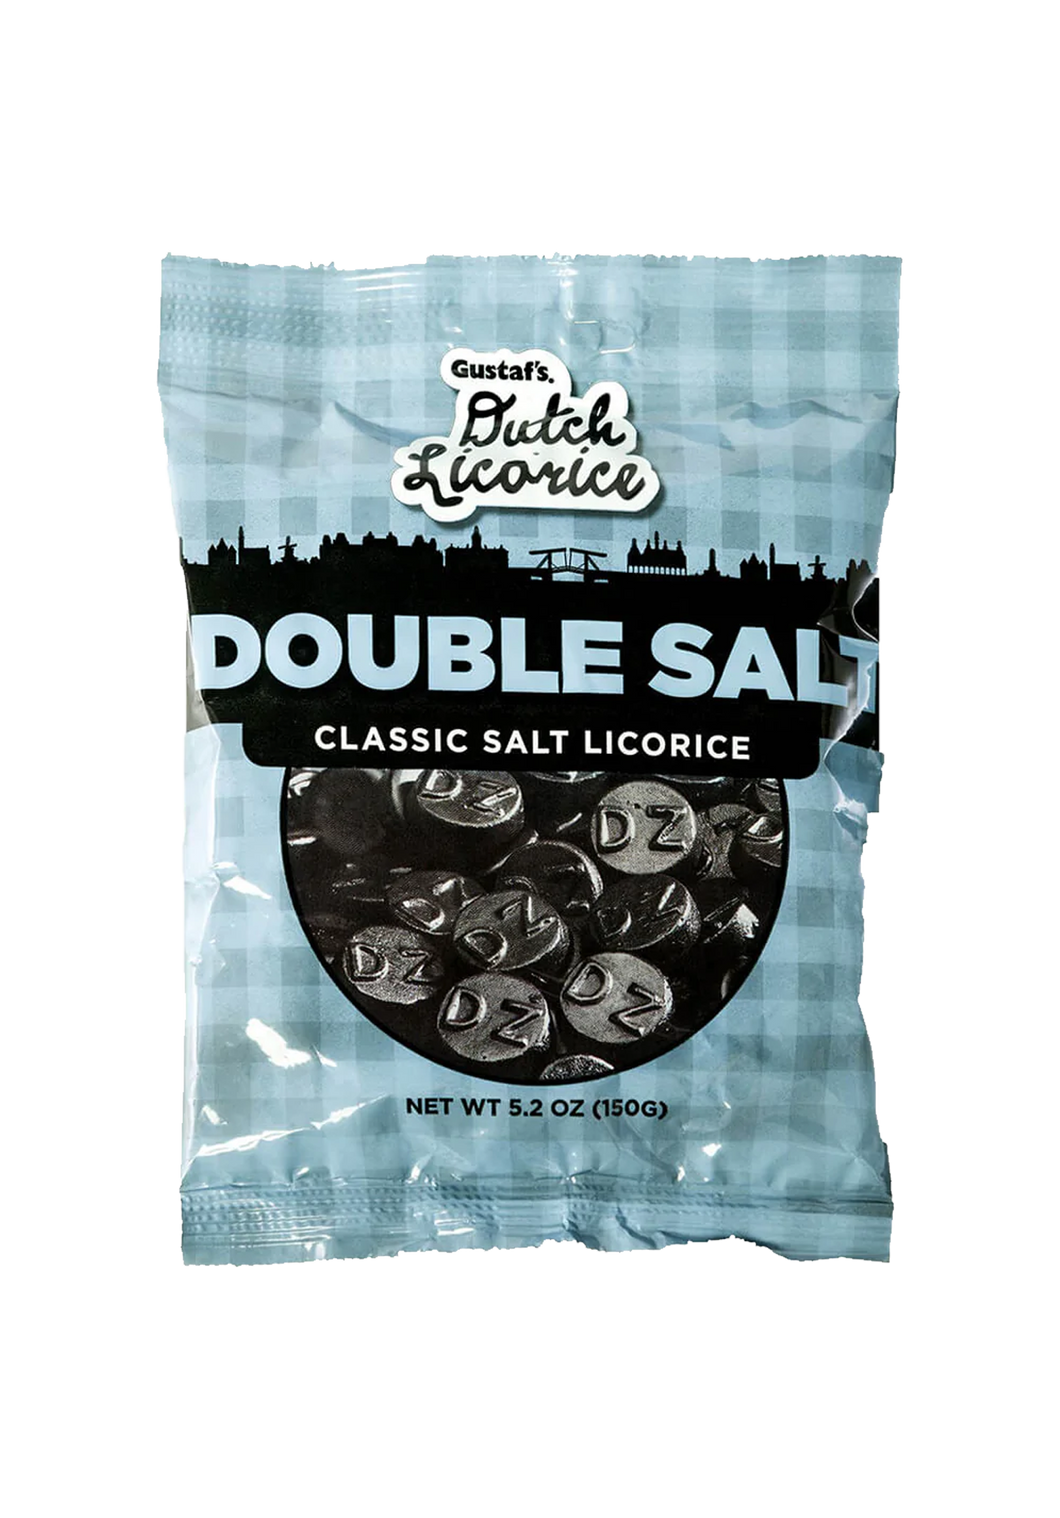 Gustaf's Dutch Licorice Double Salt Classic Salt Licorice 150g